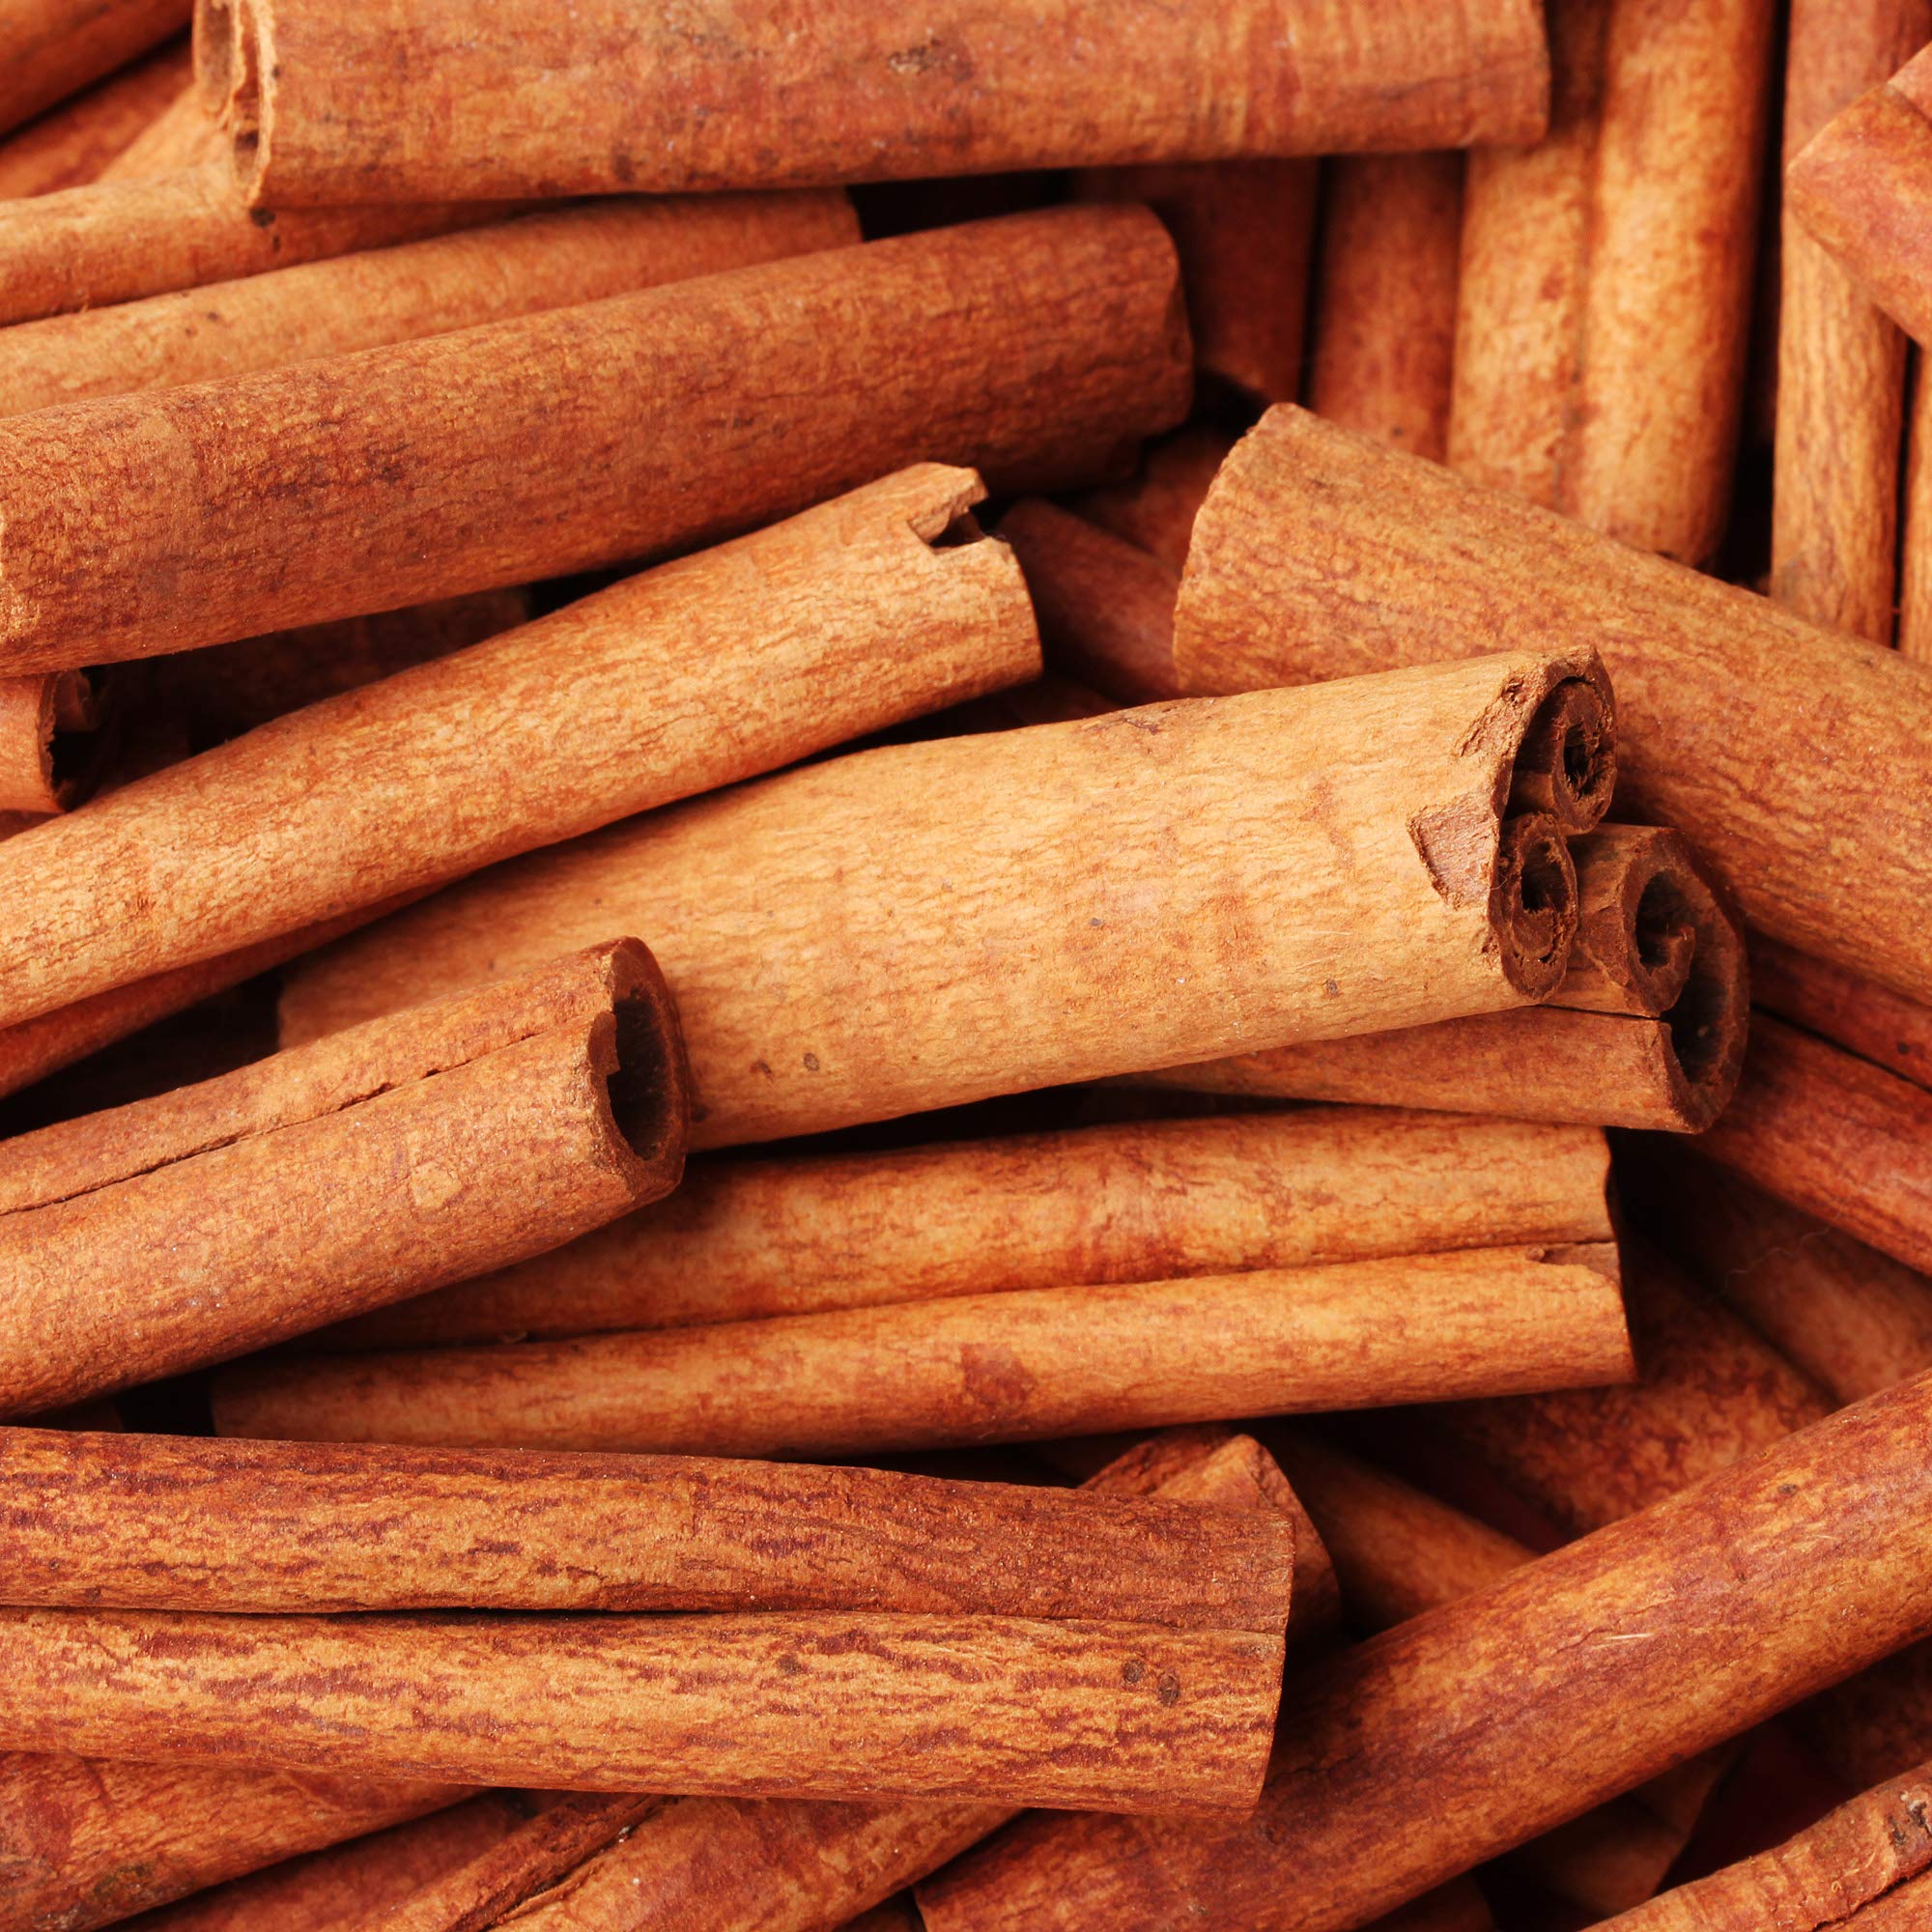 Organic Cinnamon Sticks - 1 oz French Jar - 5367 – The Spice Lab